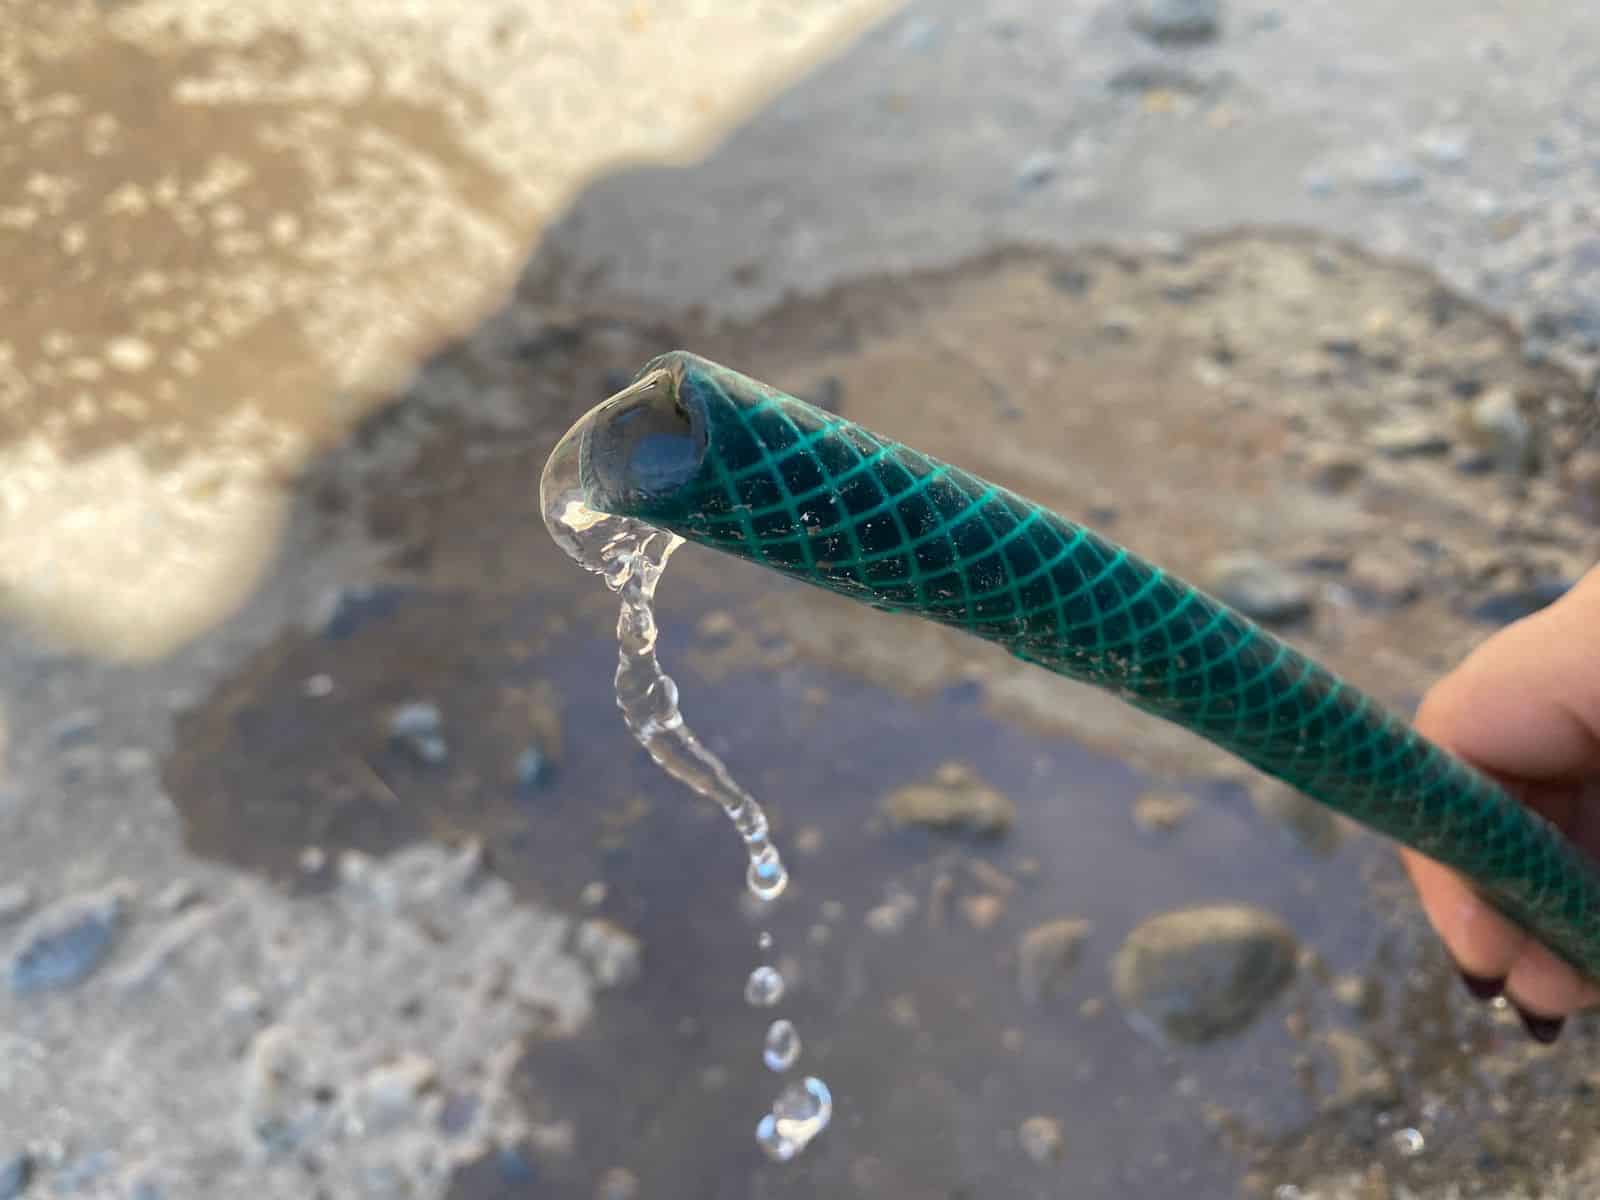 Chorrito de agua saliendo de una manguera